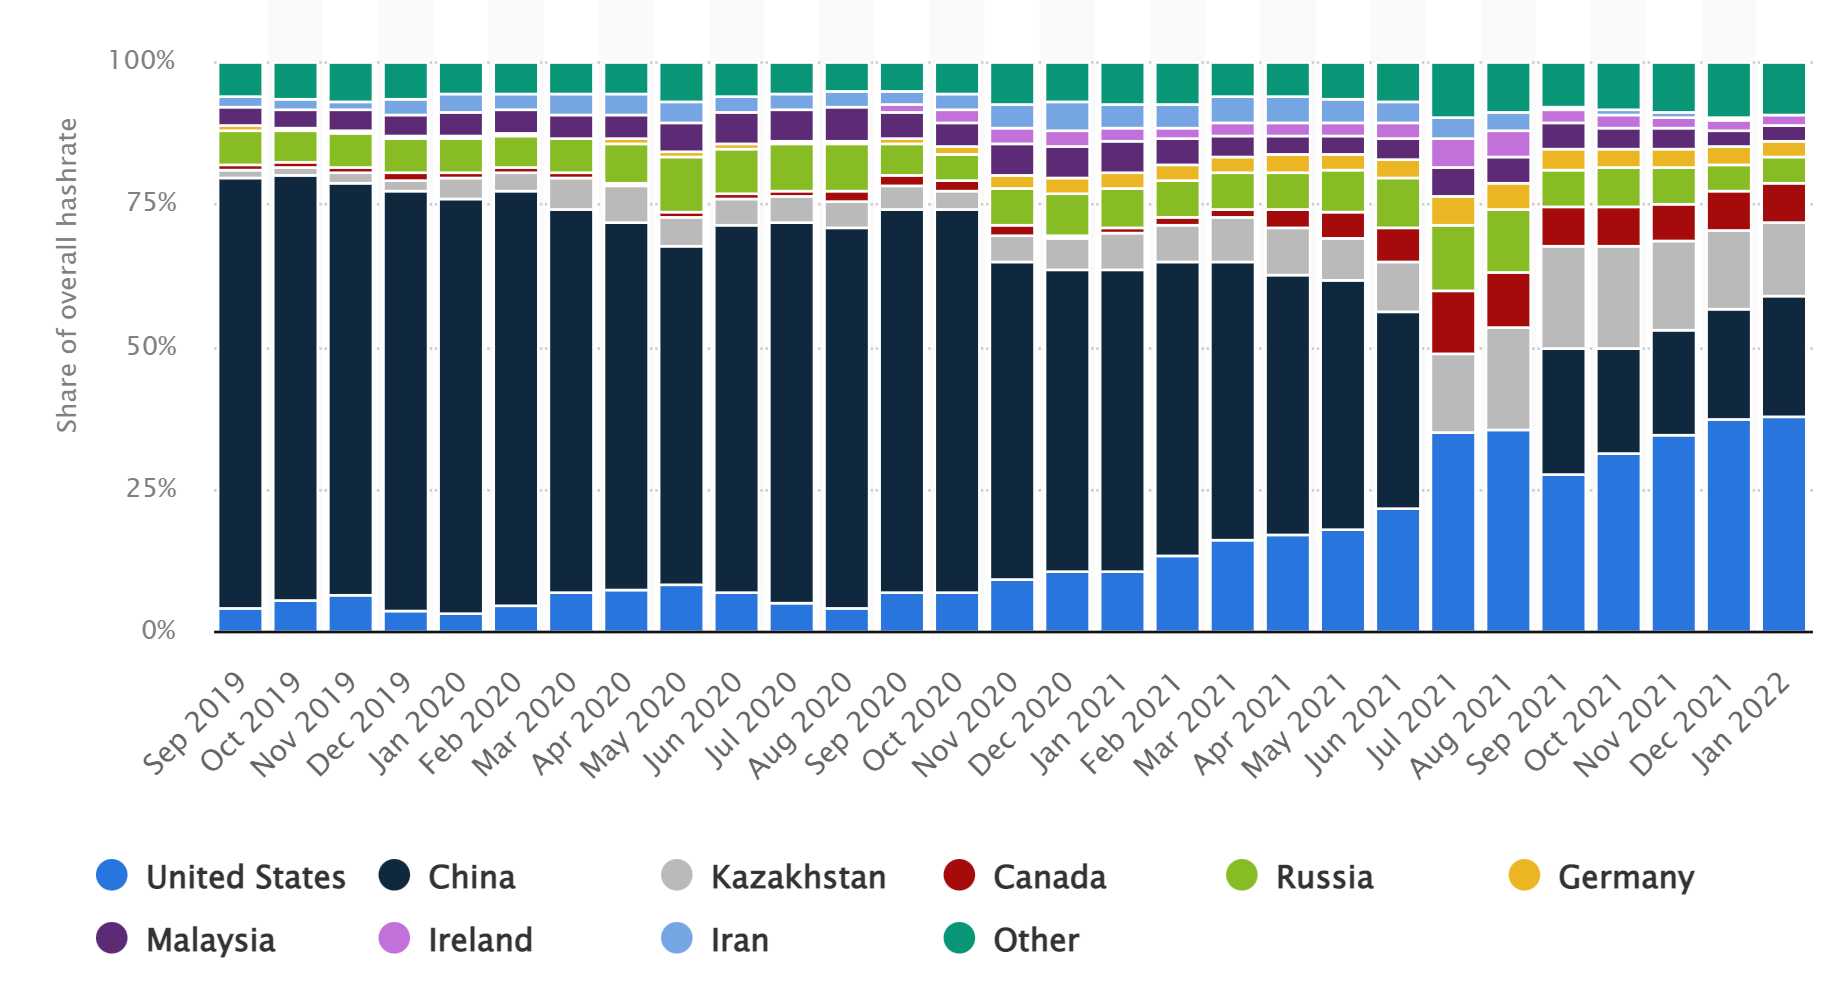 Kazakhstan among top 3 Bitcoin mining destinations after US and